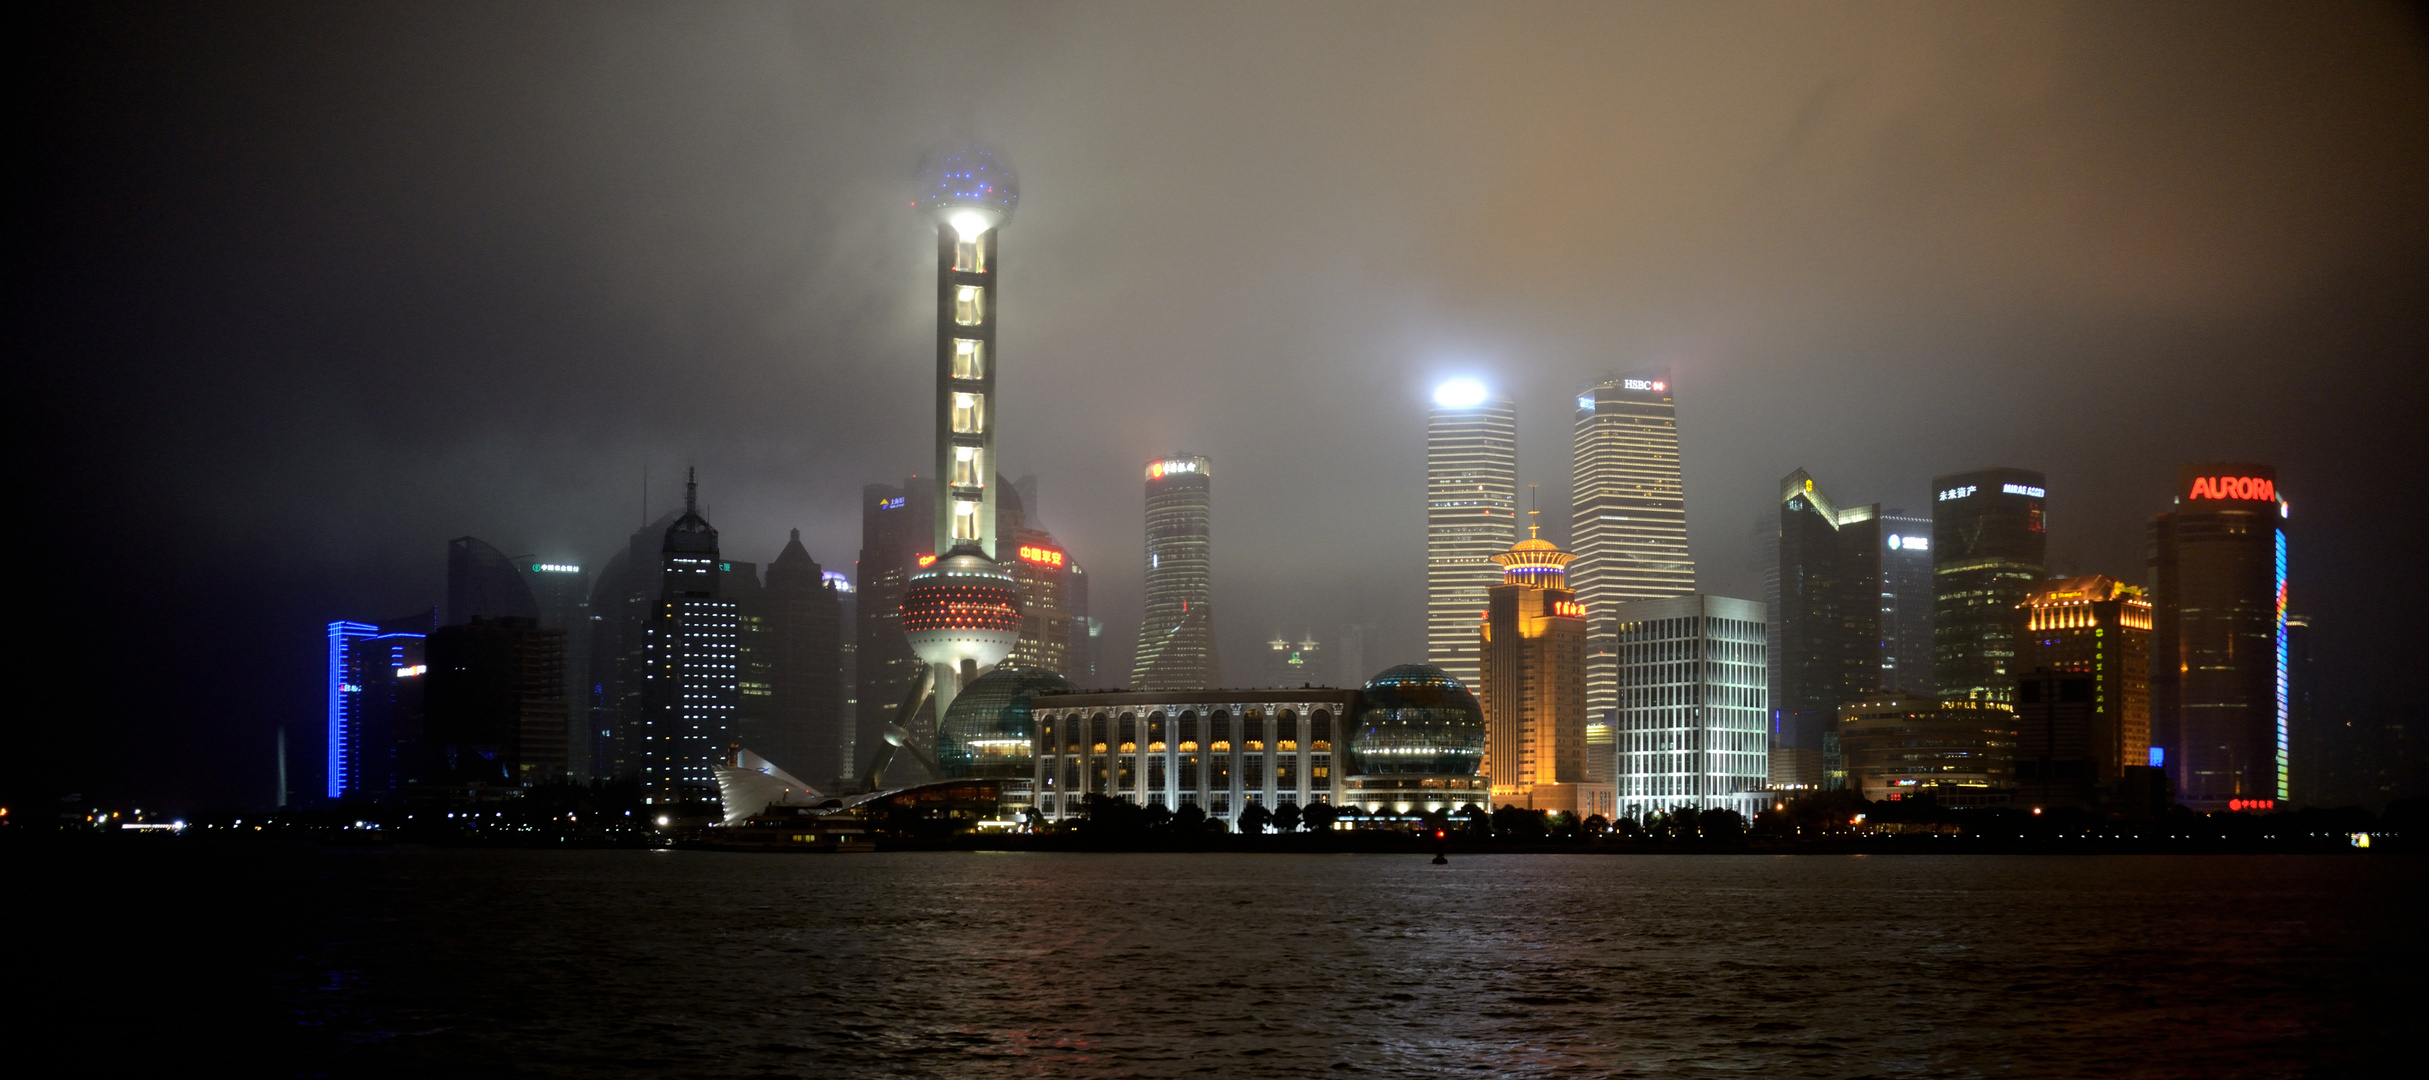 Shanghai Skyline by night